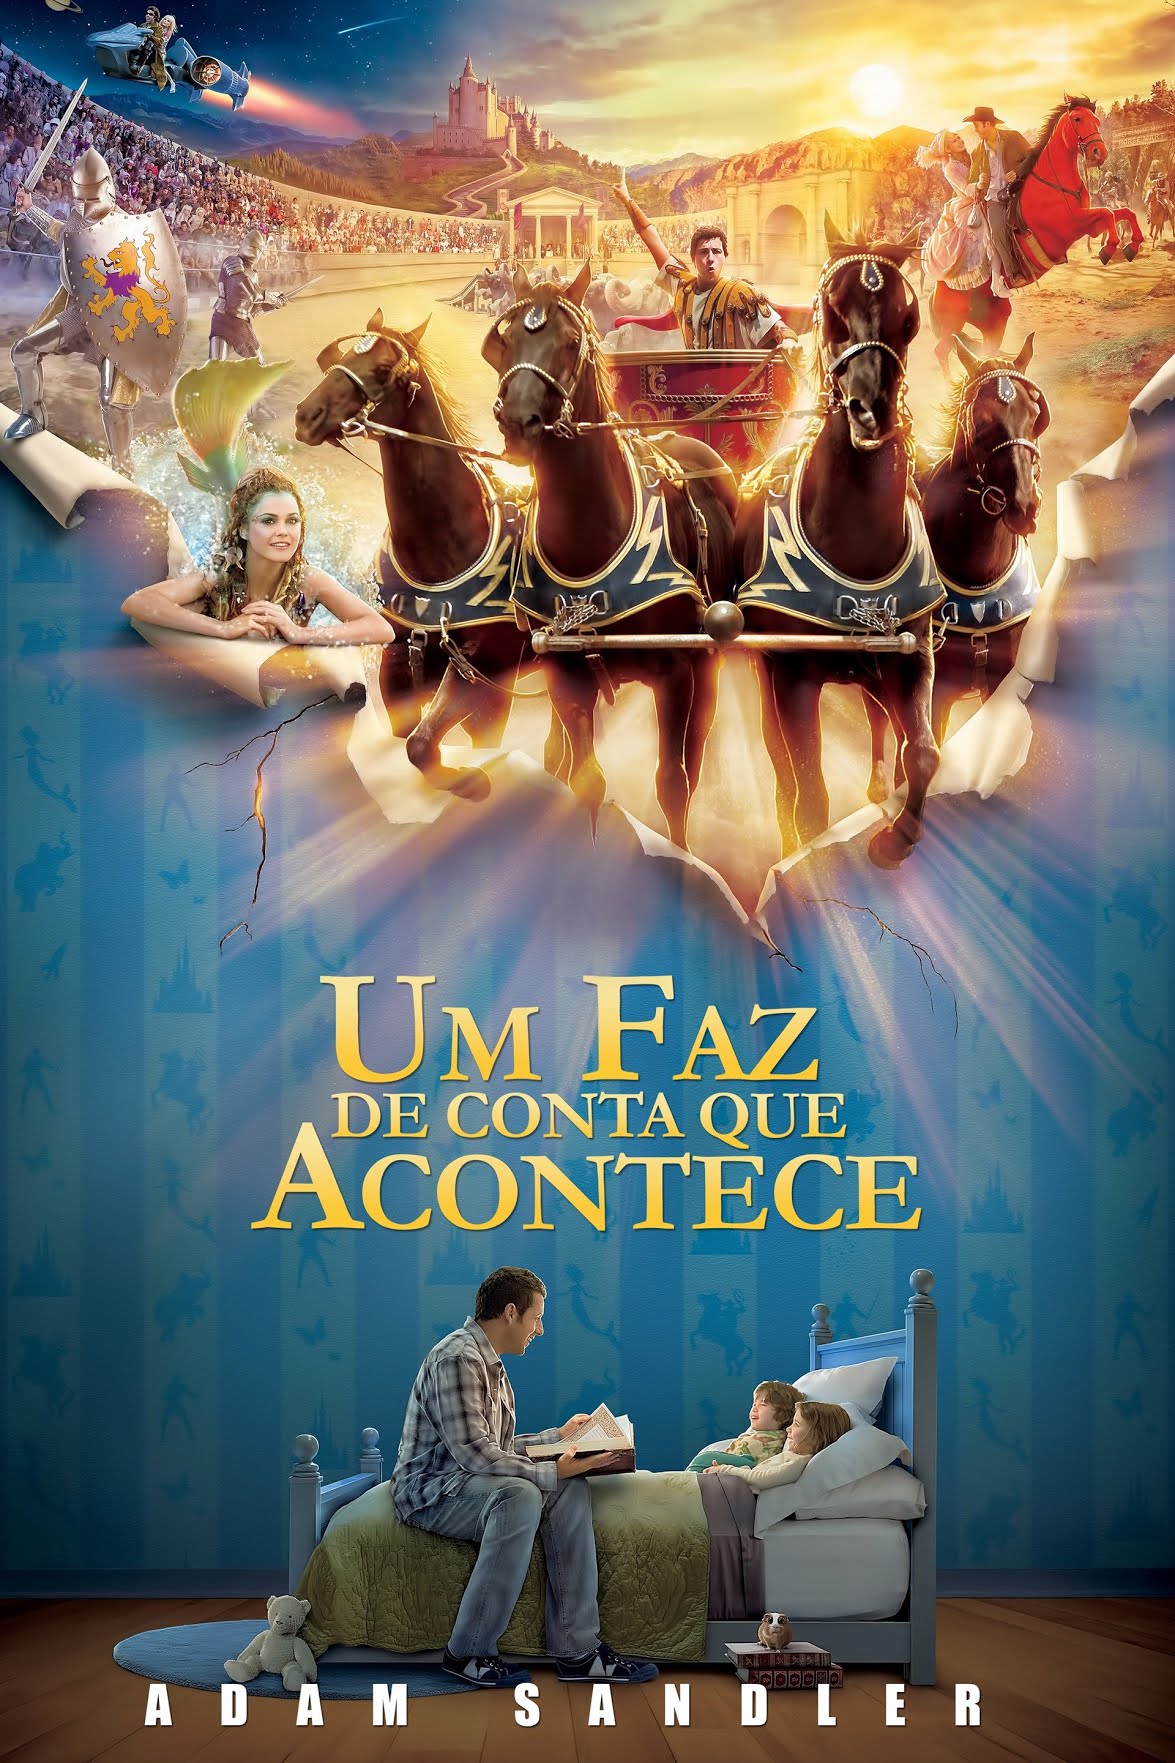 Jogo do Copo (2014) - IMDb